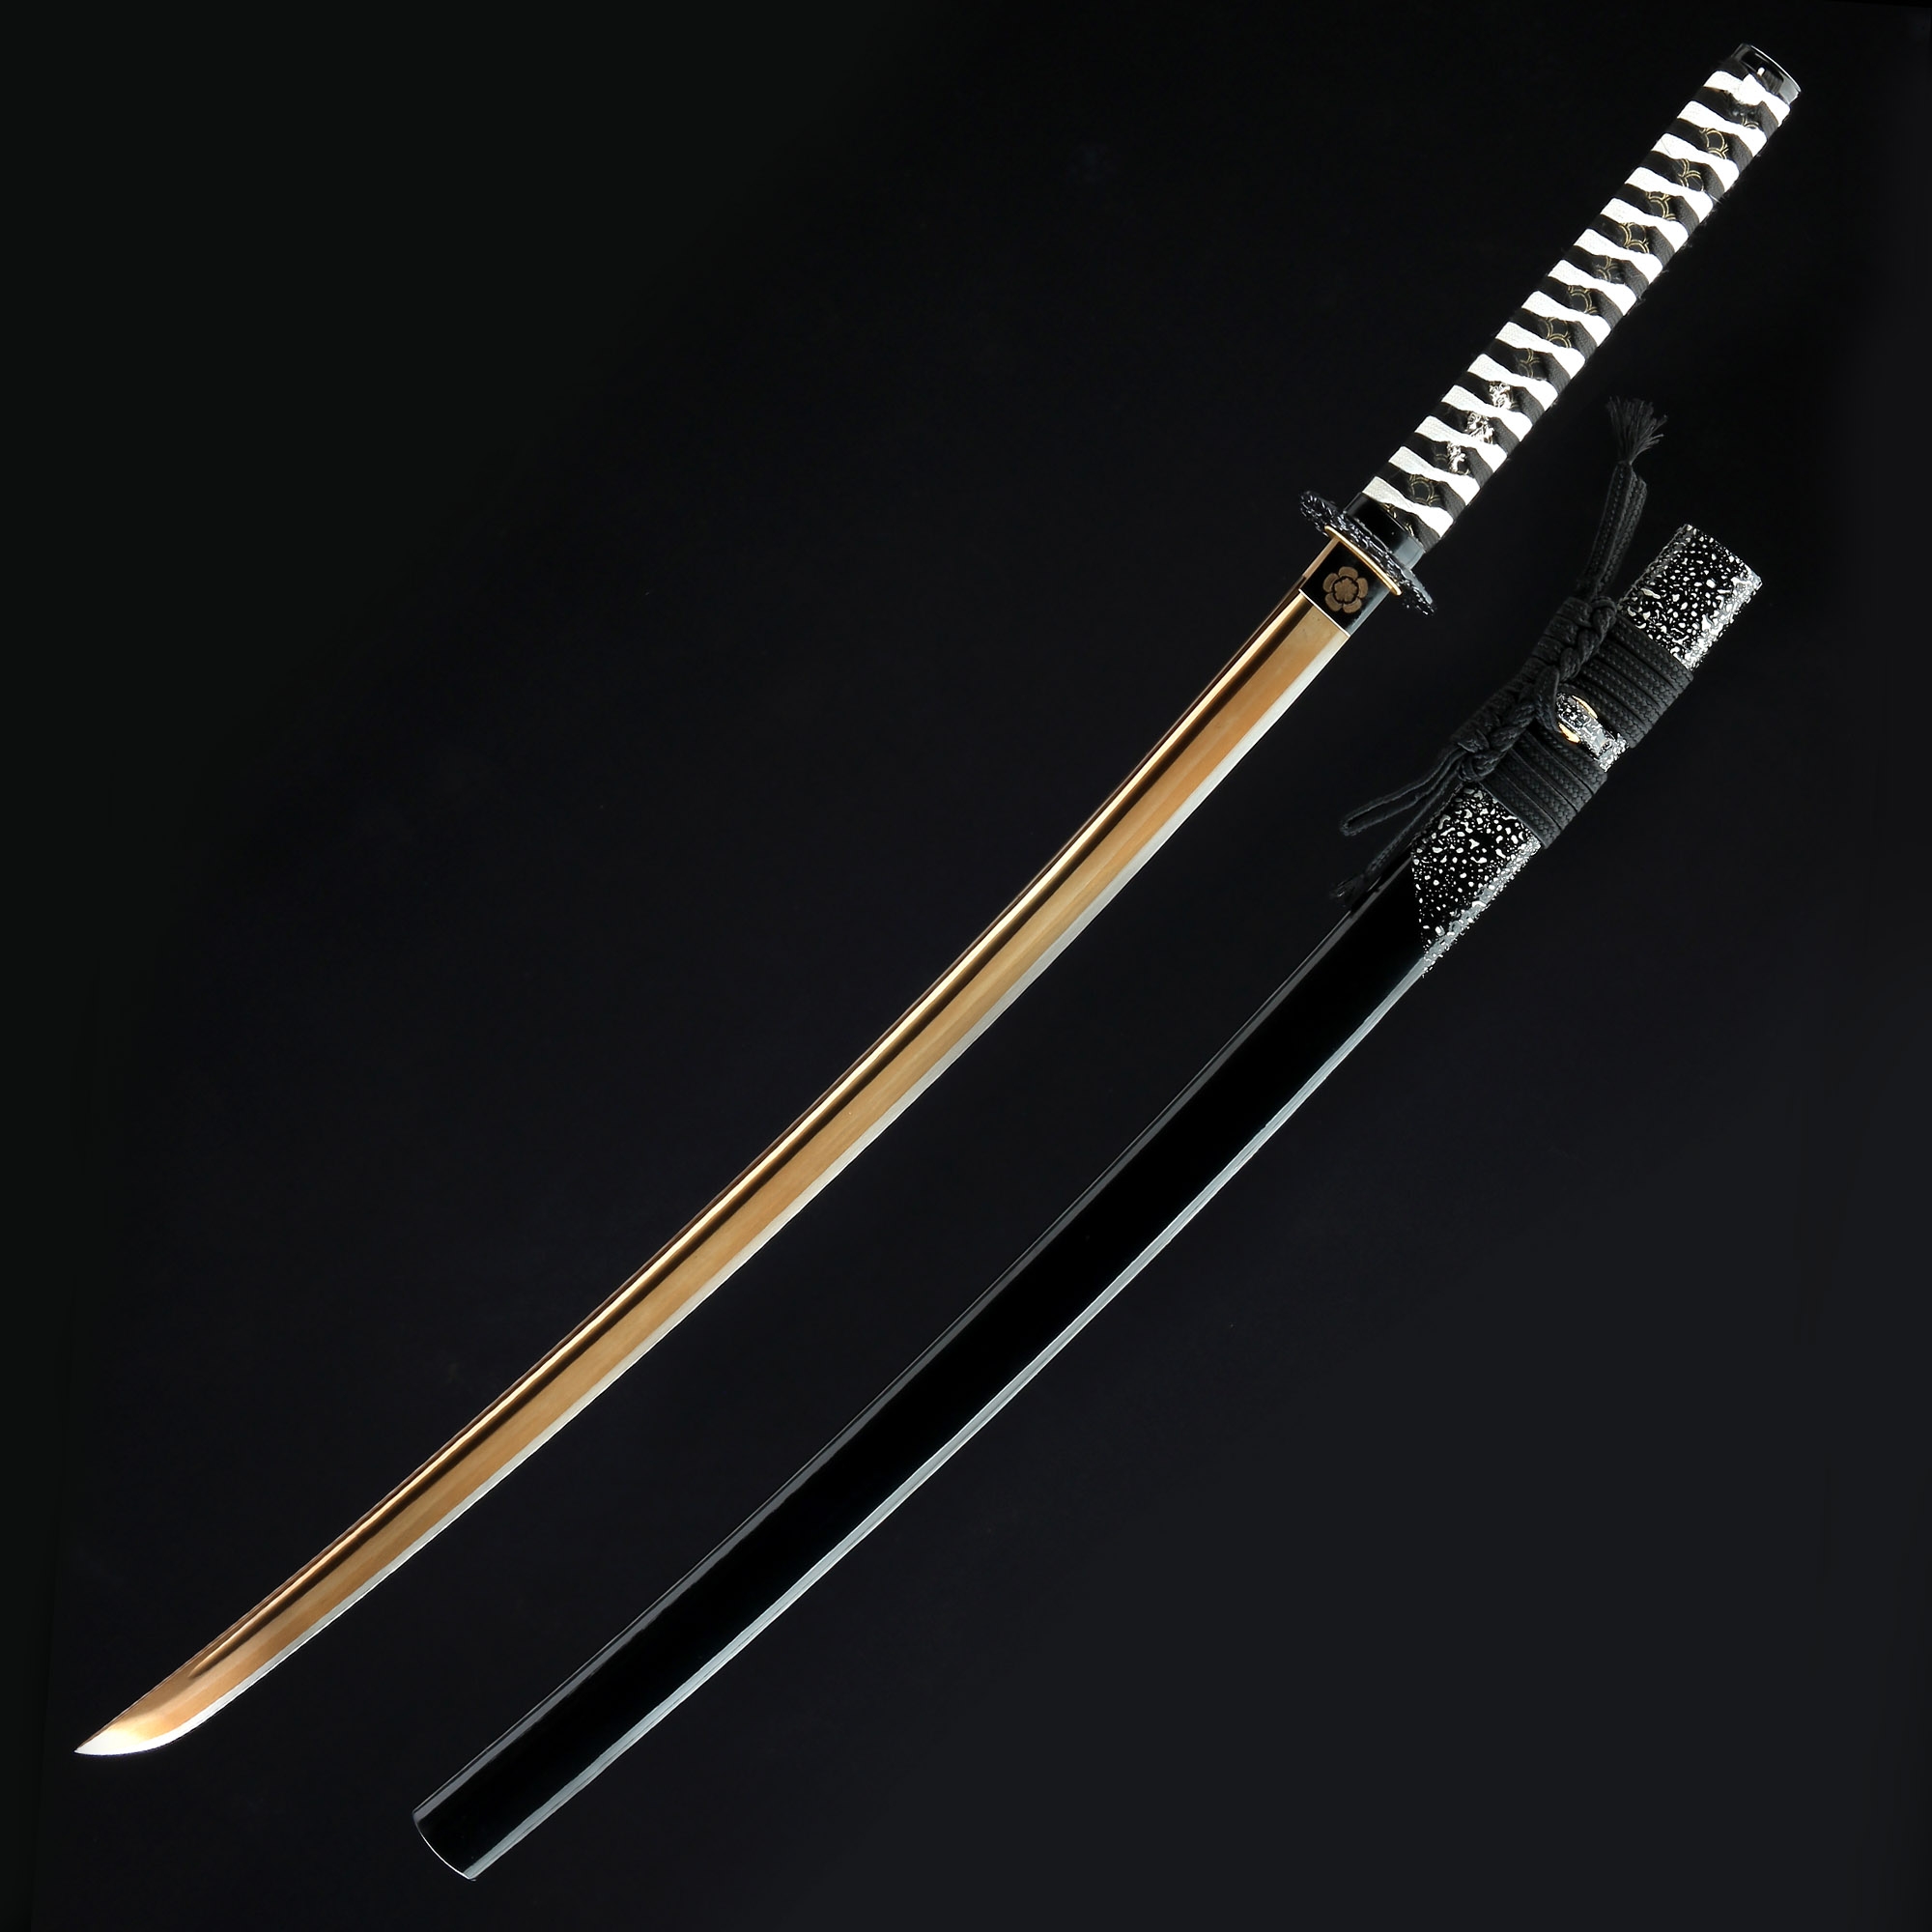 HANDMADE JAPANESE SAMURAI KATANA SWORD 1060 HIGH CARBON STEEL FULL TANG SHARP 